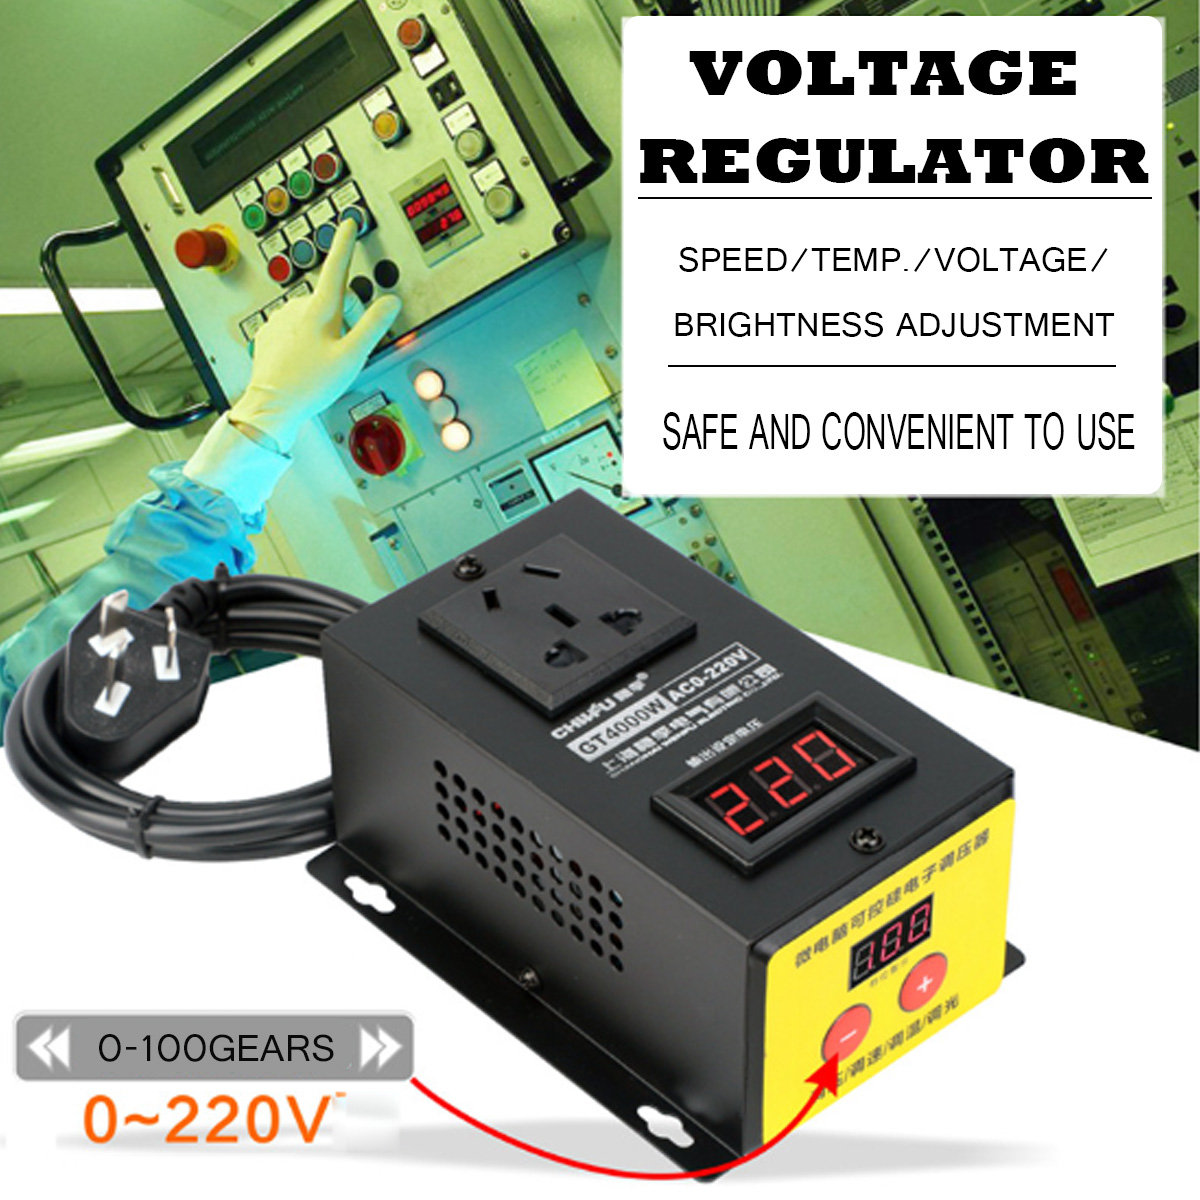 AC-0-220V-4000W-Variable-Voltage-Regulator-Power-Drill-Motor-Speed-Fan-Control-Controller-RA-1504030-2